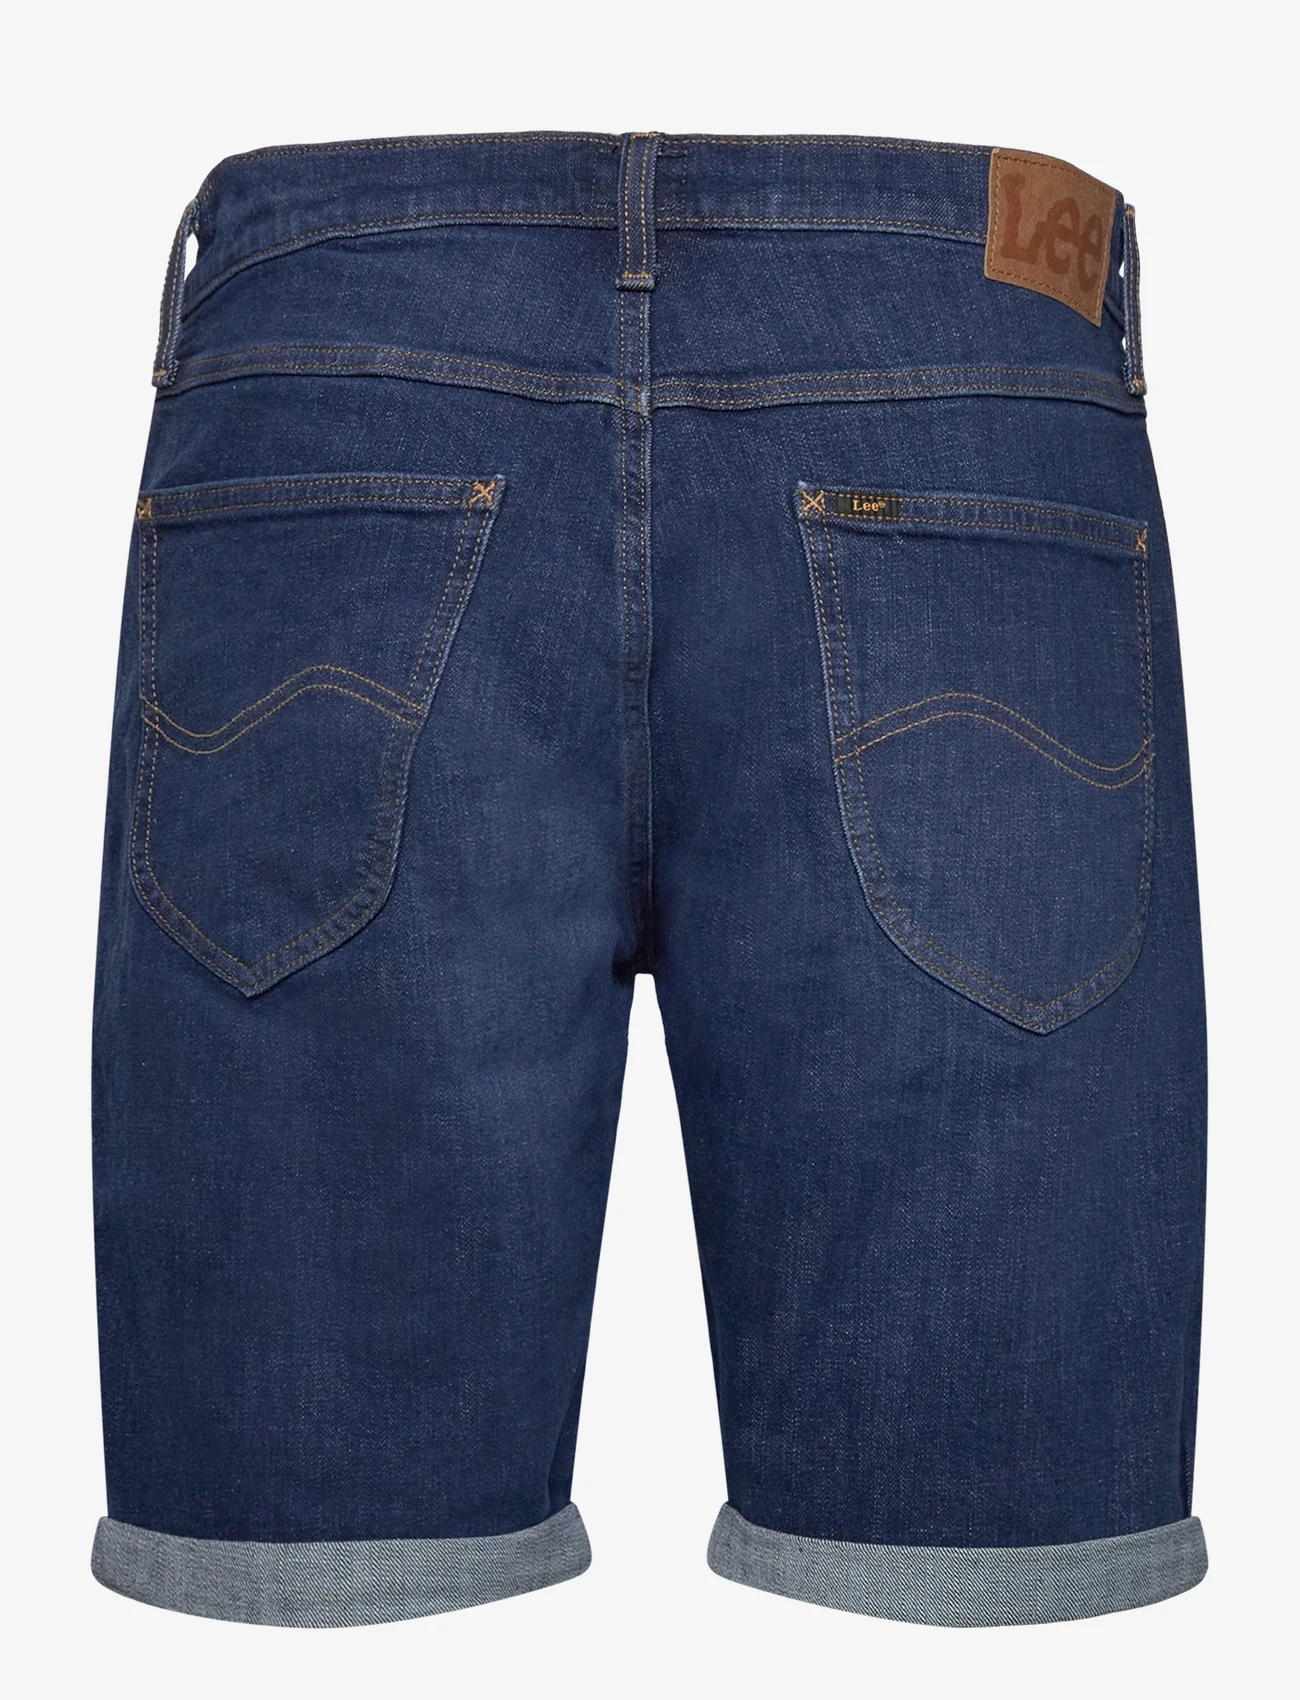 Lee Jeans - 5 POCKET SHORT - jeansshorts - springfield - 1